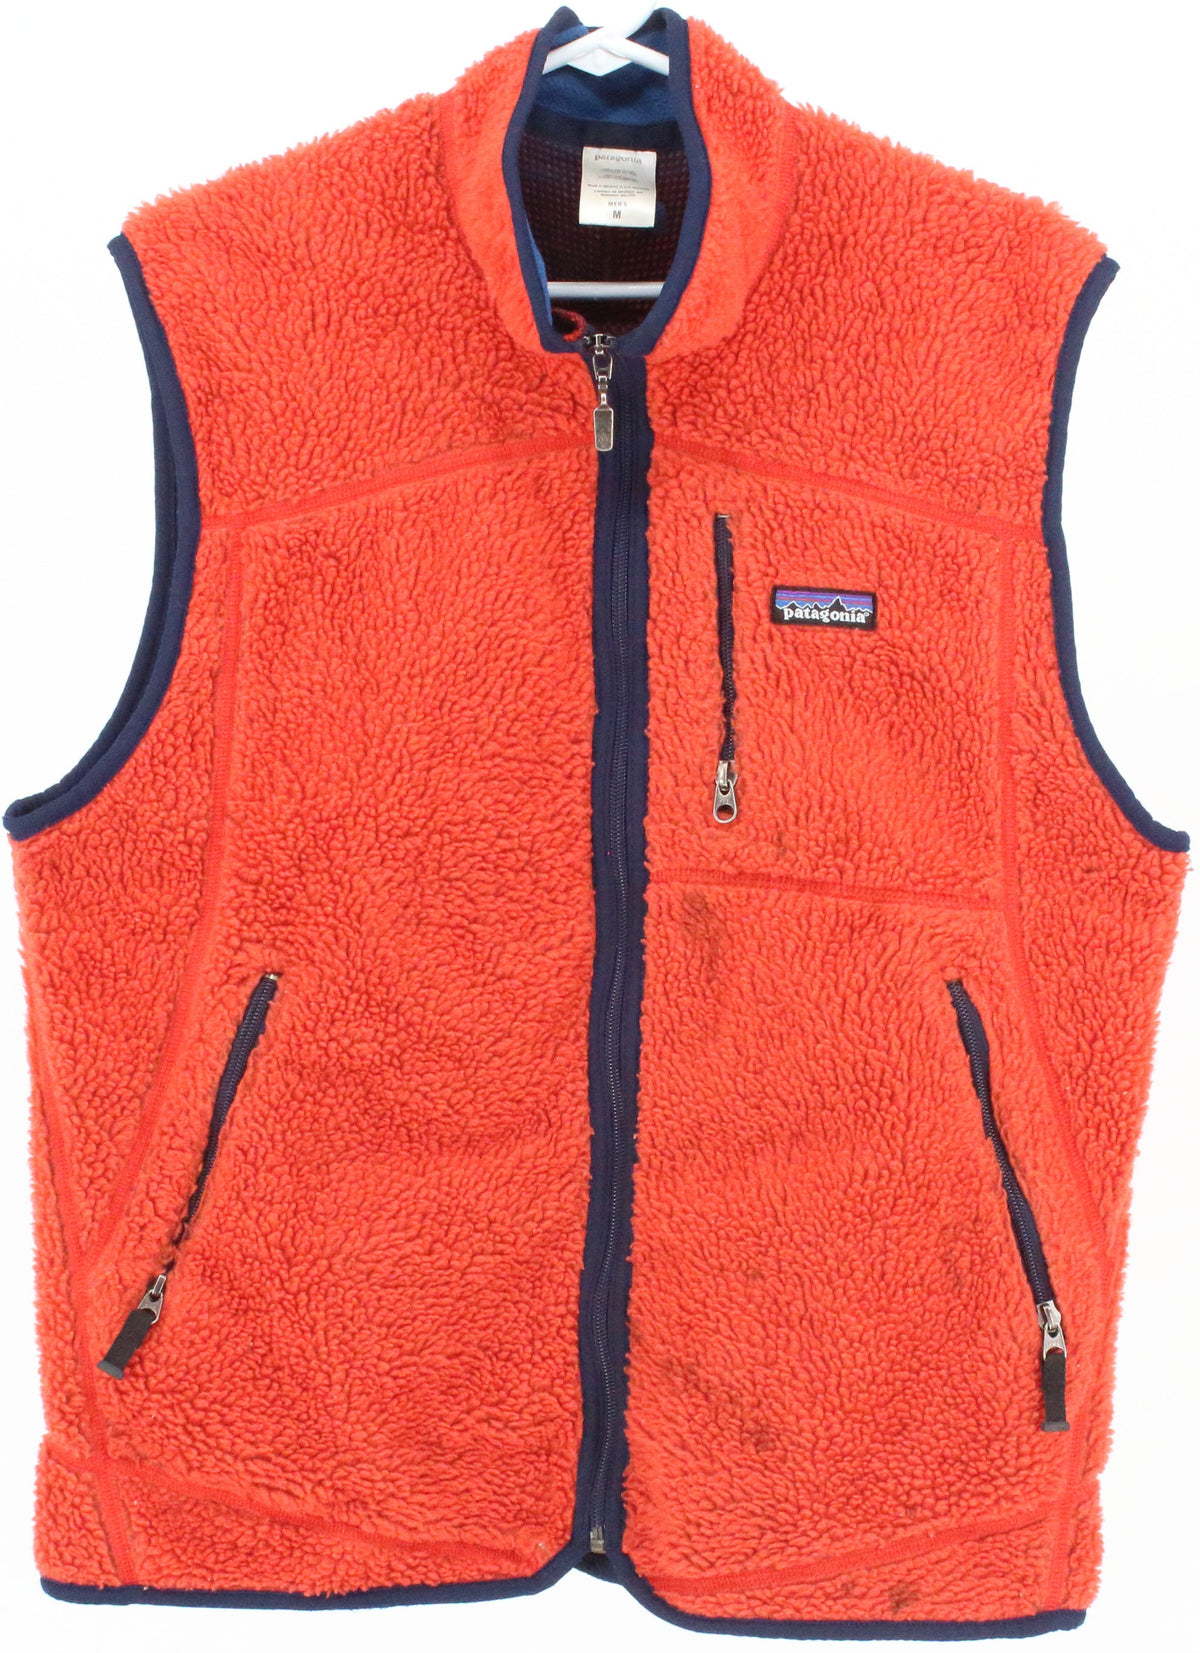 Patagonia Orange and Blue Men's Fleece Vest